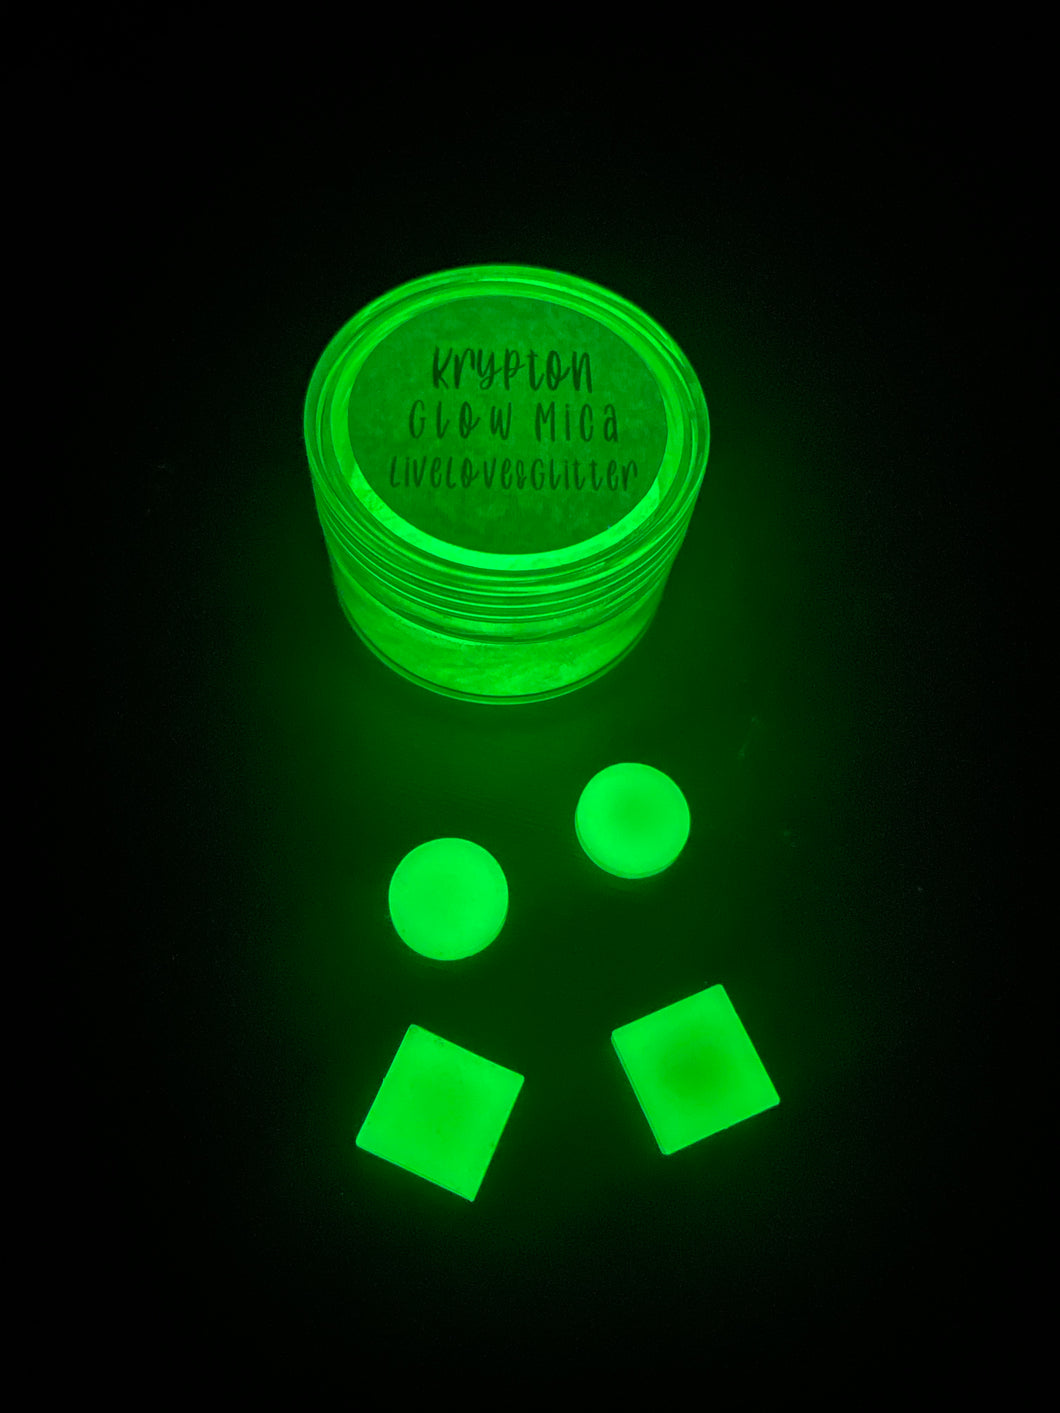 Krypton Glow Mica Pigment